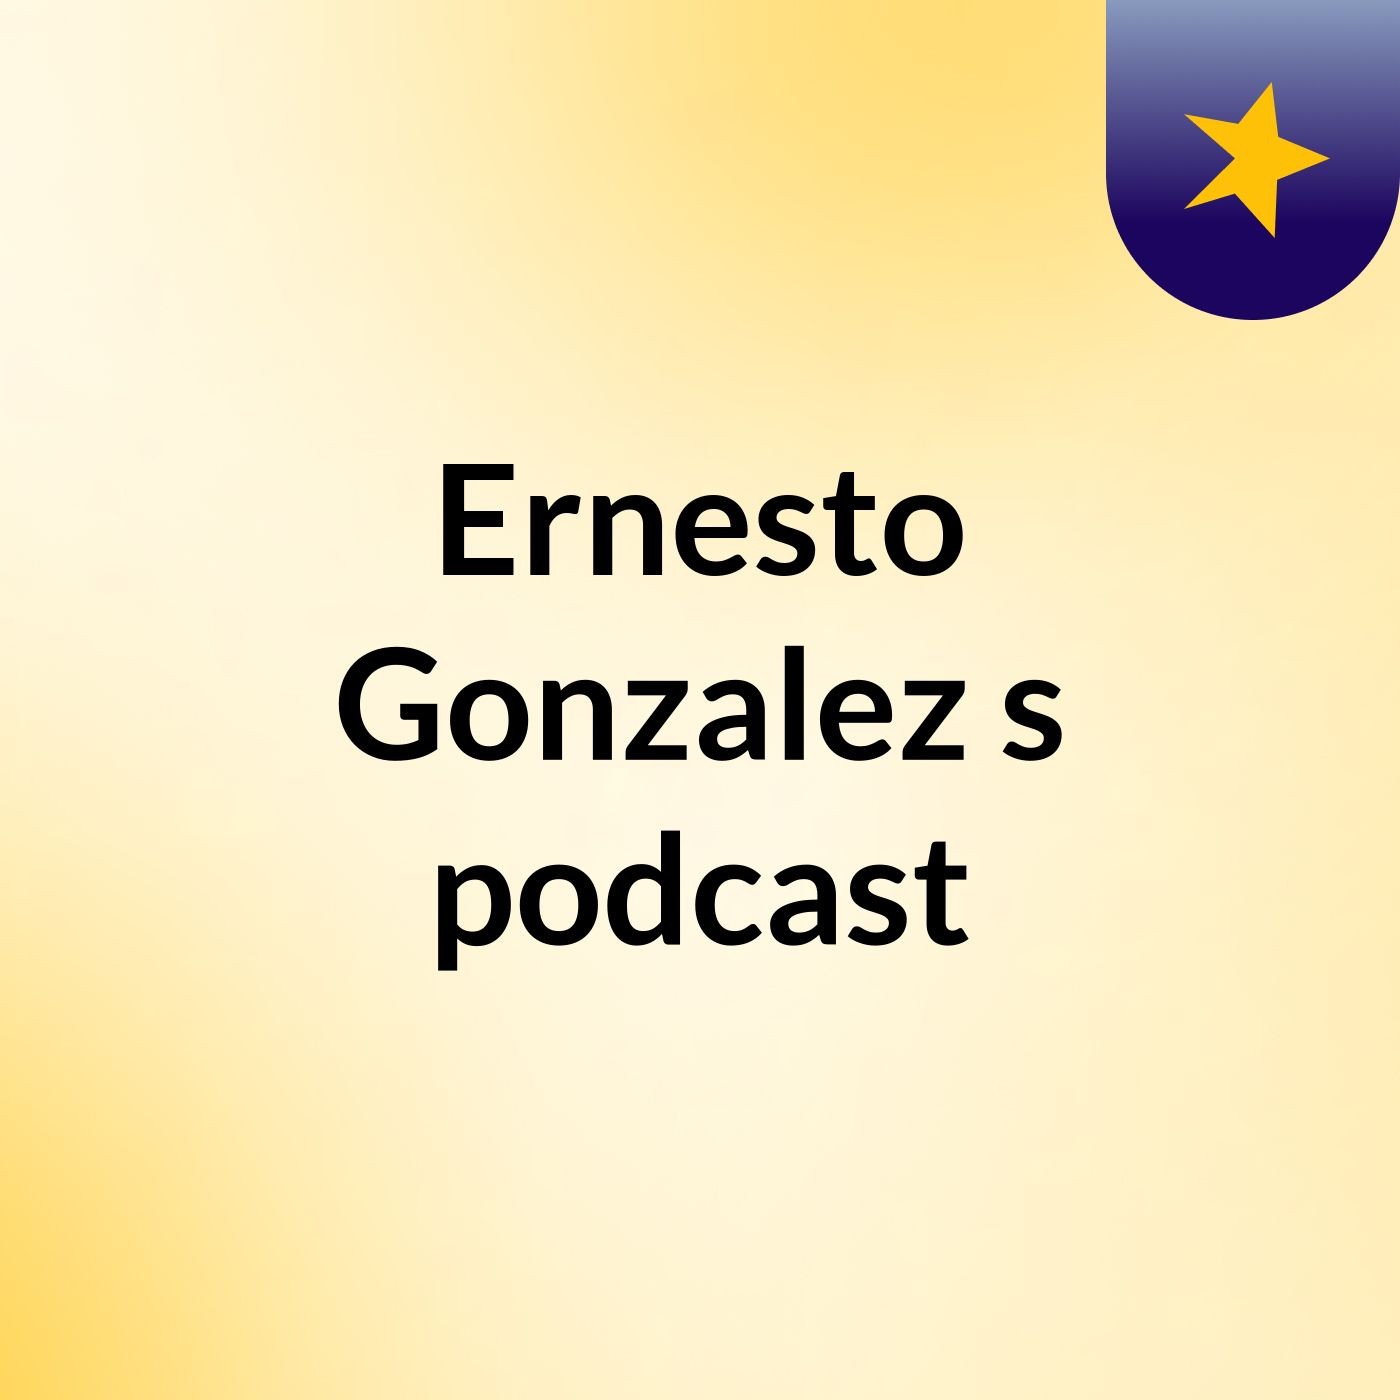 Ernesto Gonzalez's podcast